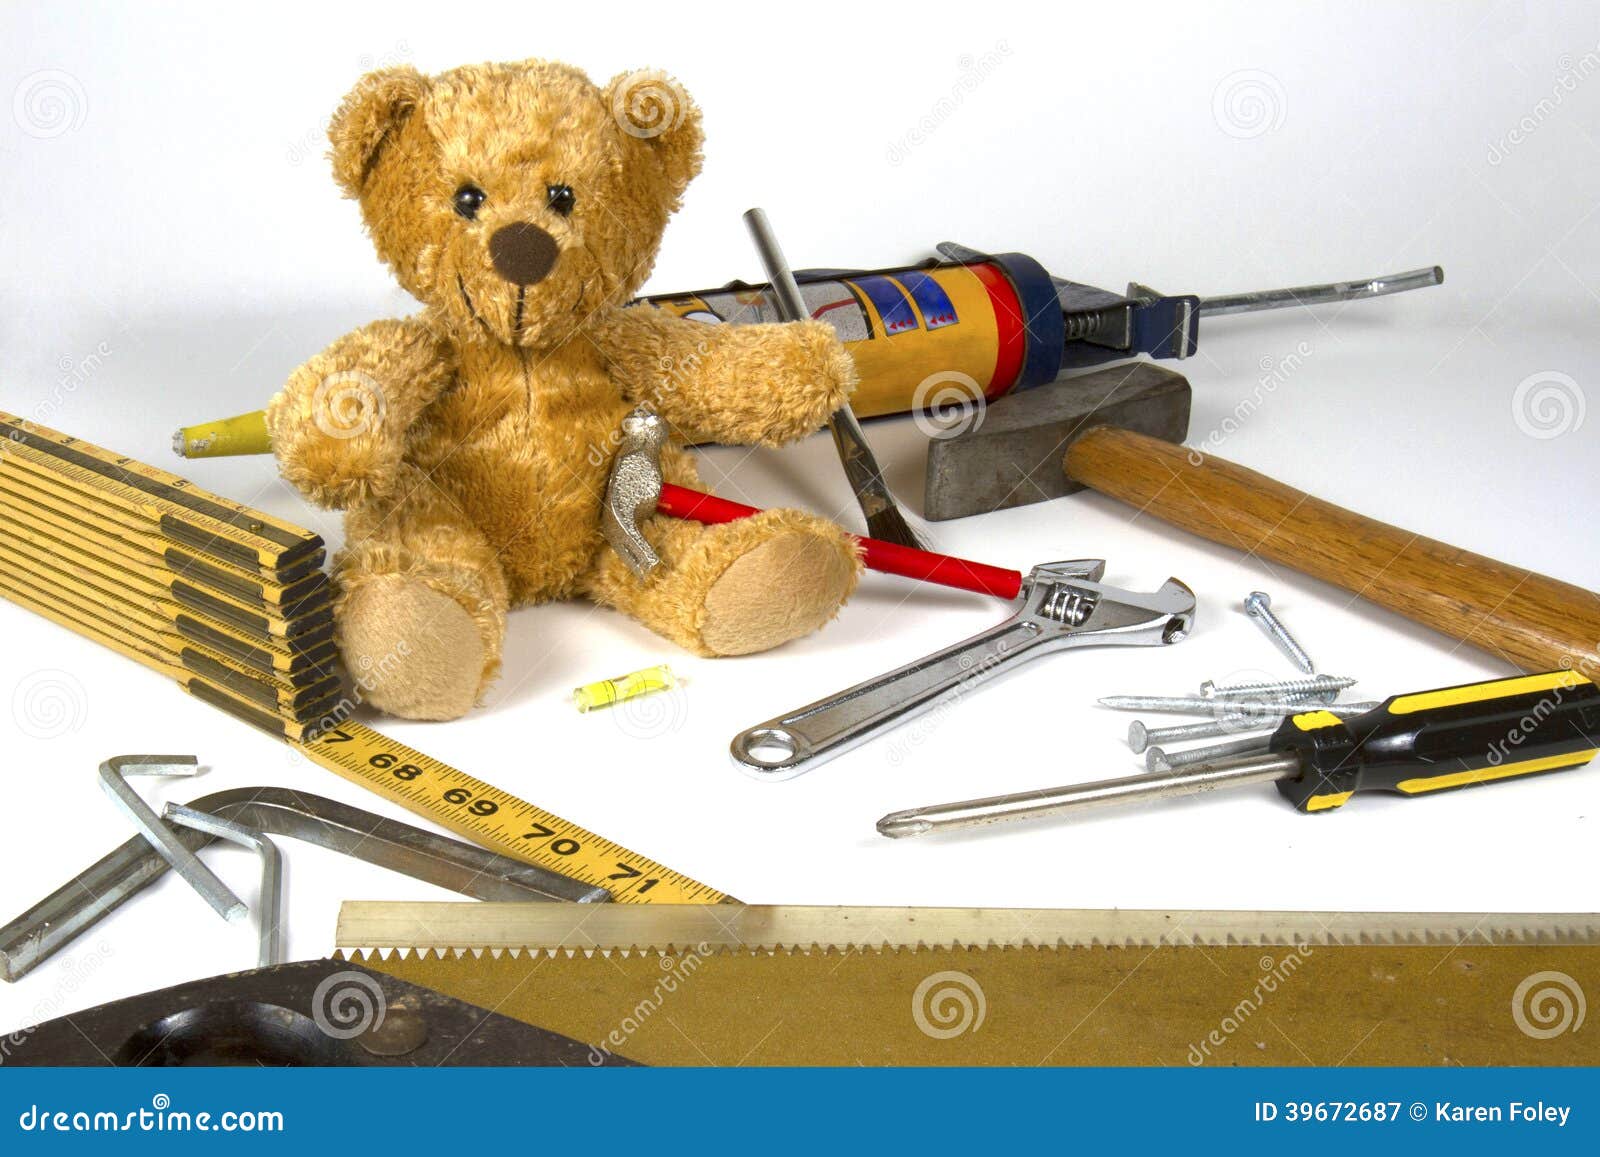 teddy-bear-repairman-sitting-amid-home-repair-maintenance-construction-tools-39672687.jpg